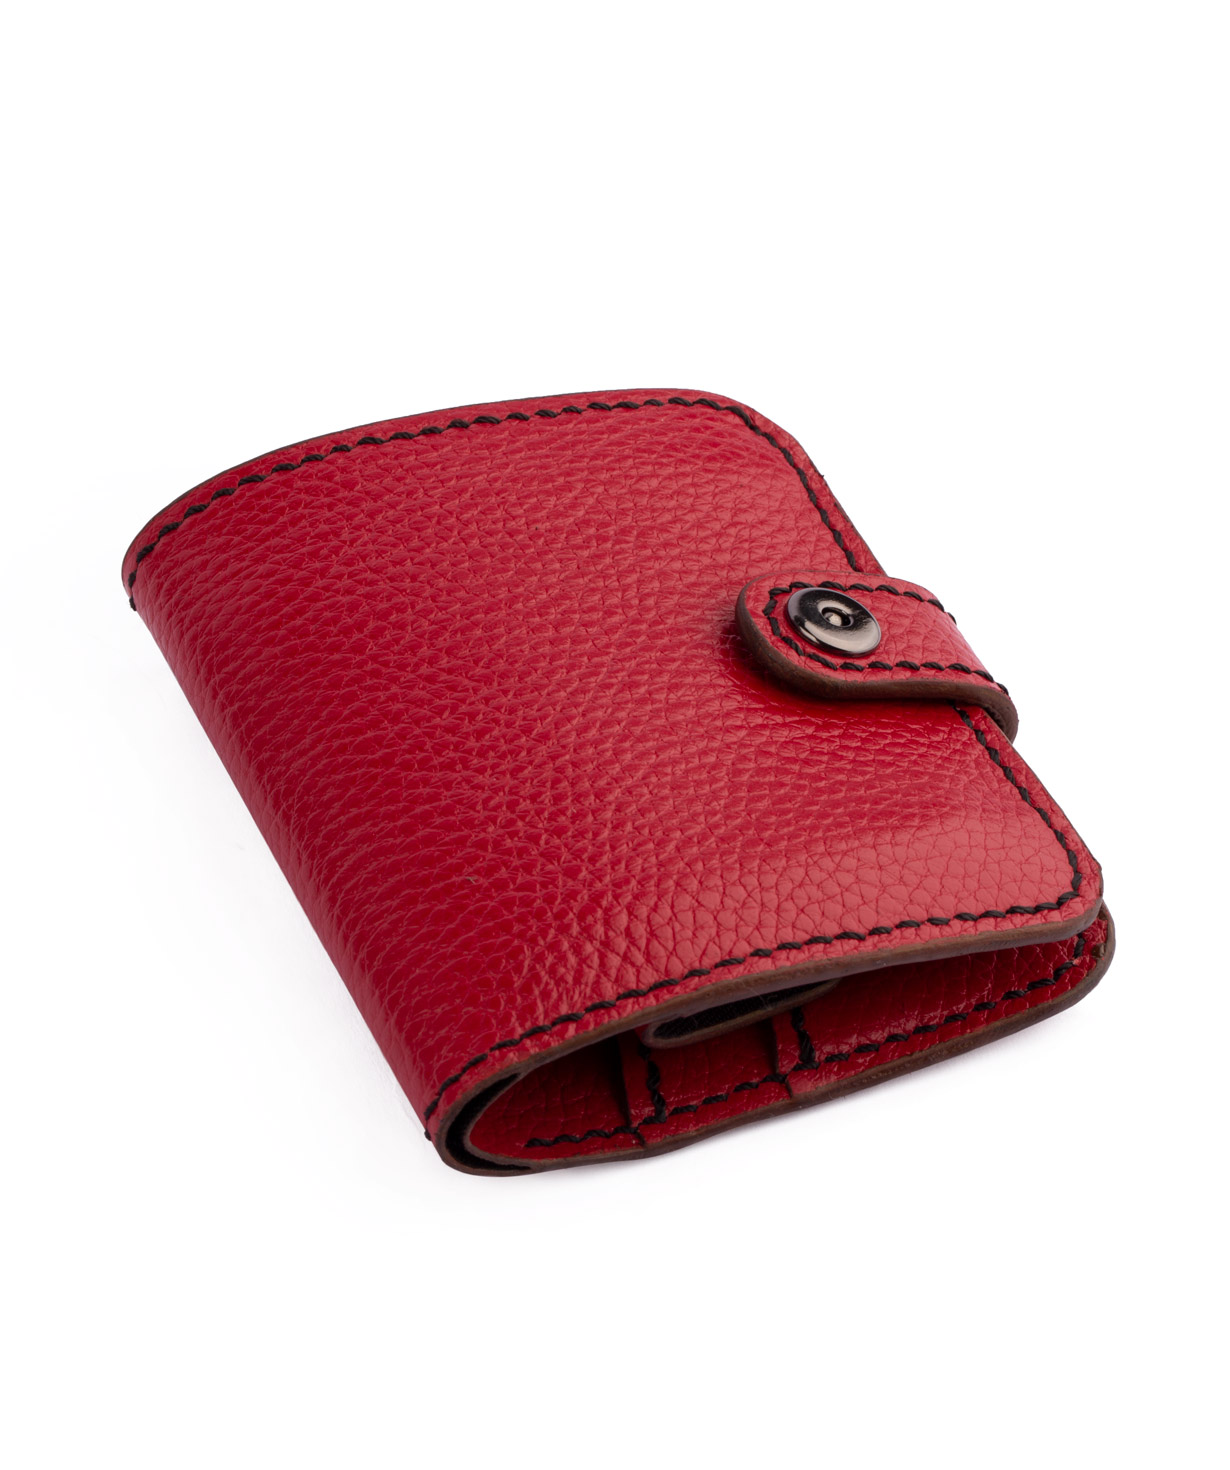 Wallet `Ruben's bag` handmade №3